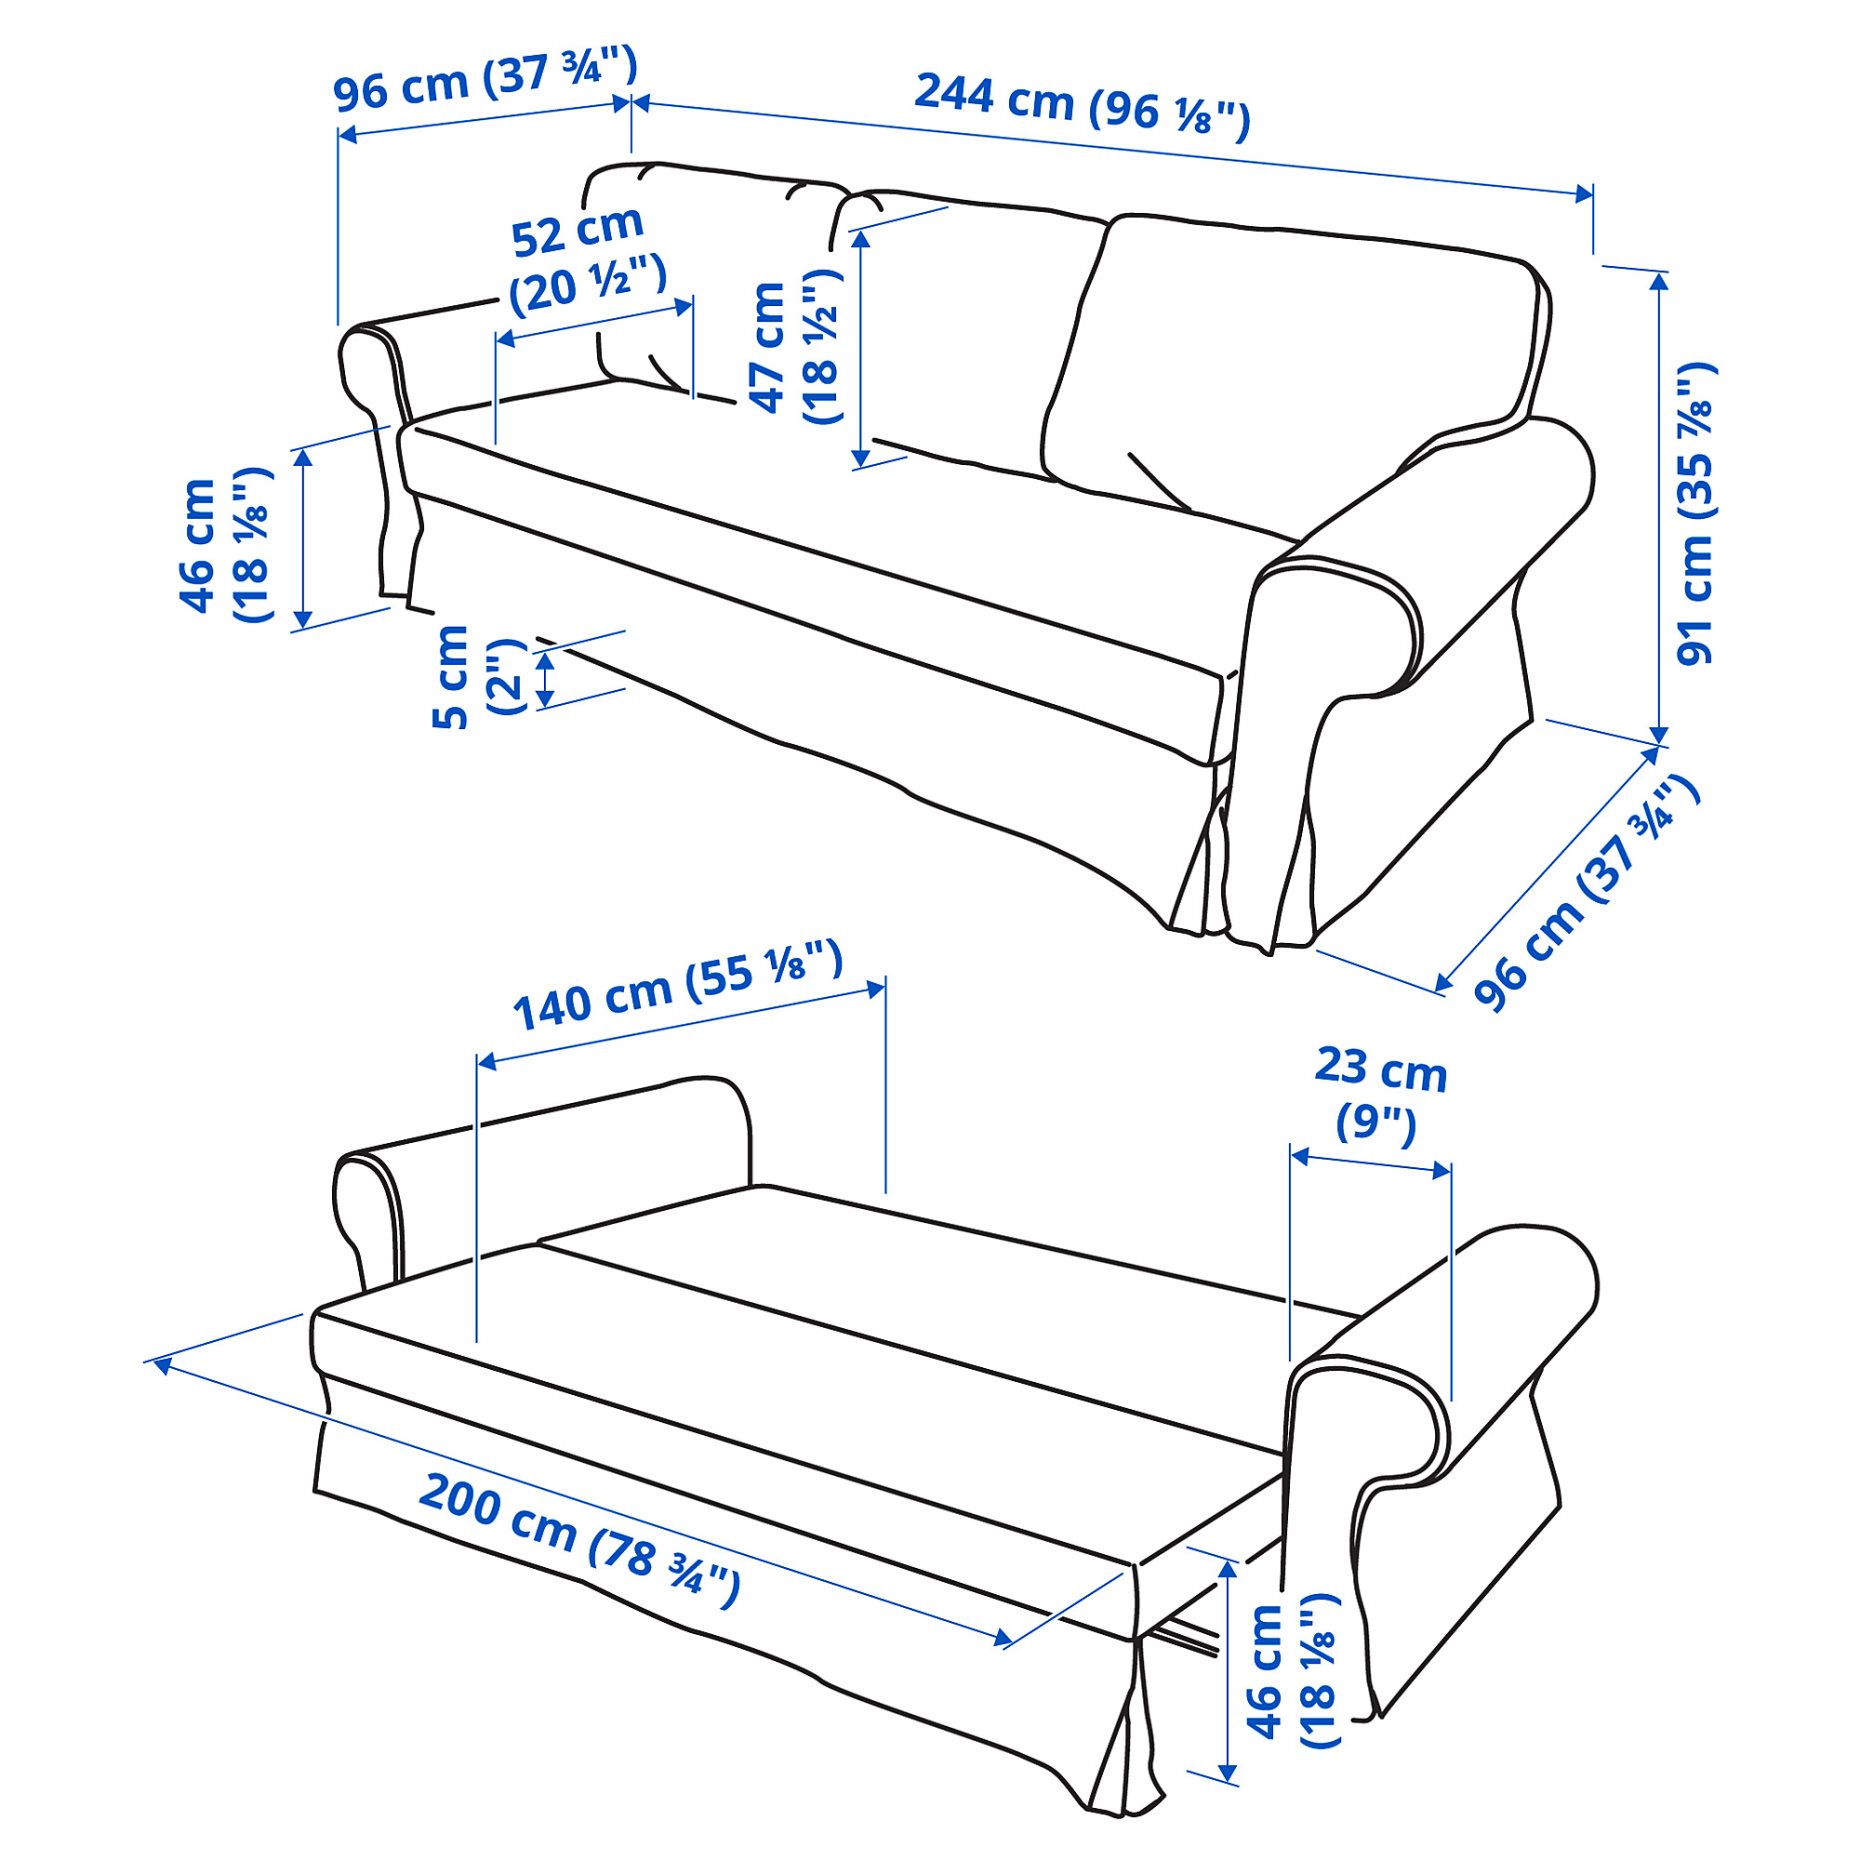 VRETSTORP, 3-seat sofa-bed, 493.201.18